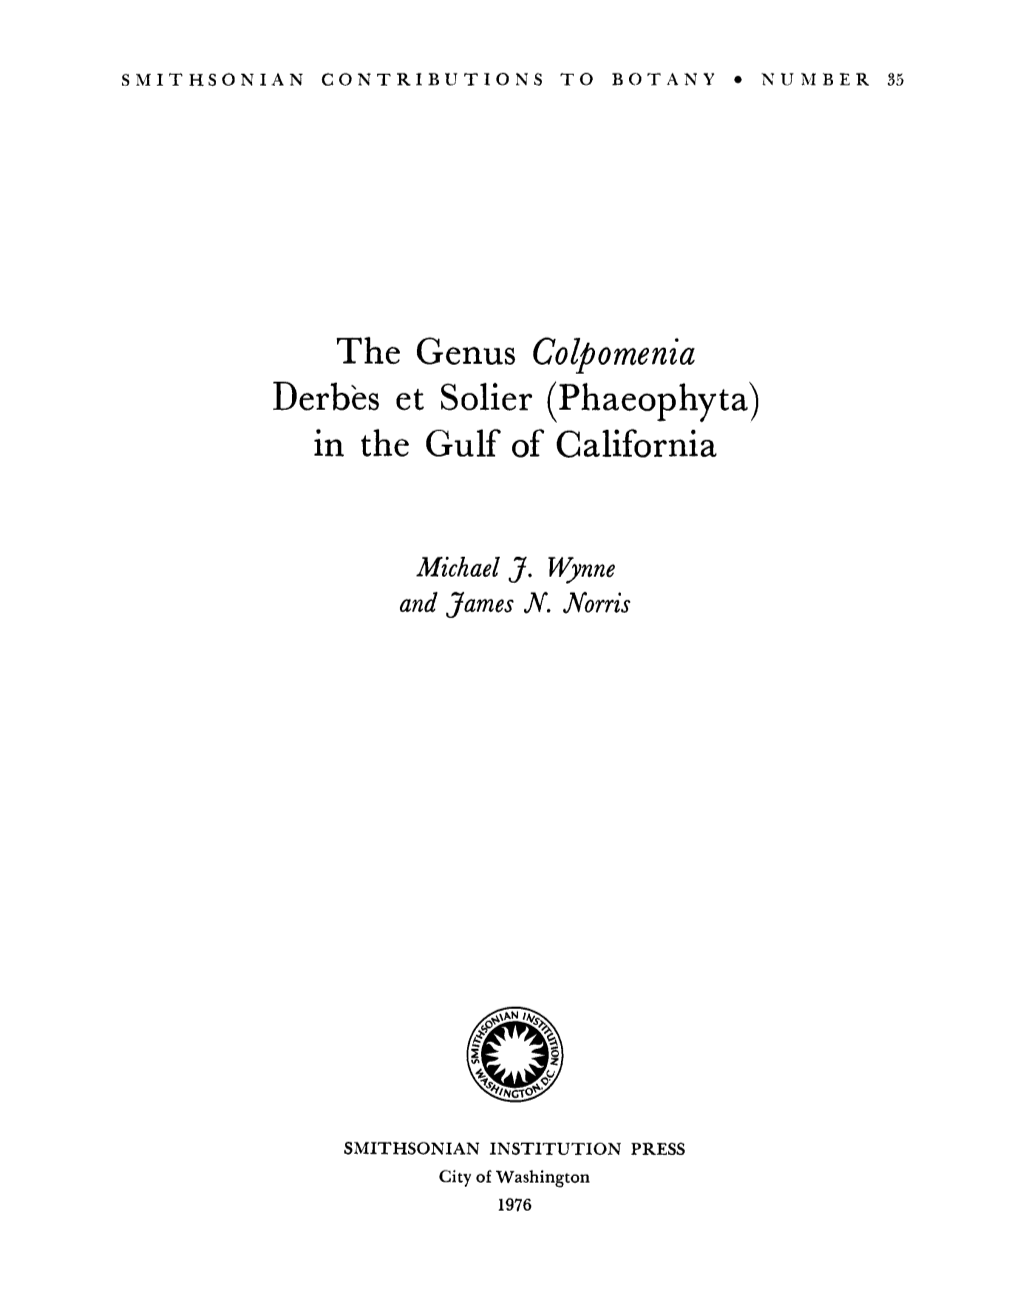 The Genus Colpomenia in the Gulf of California